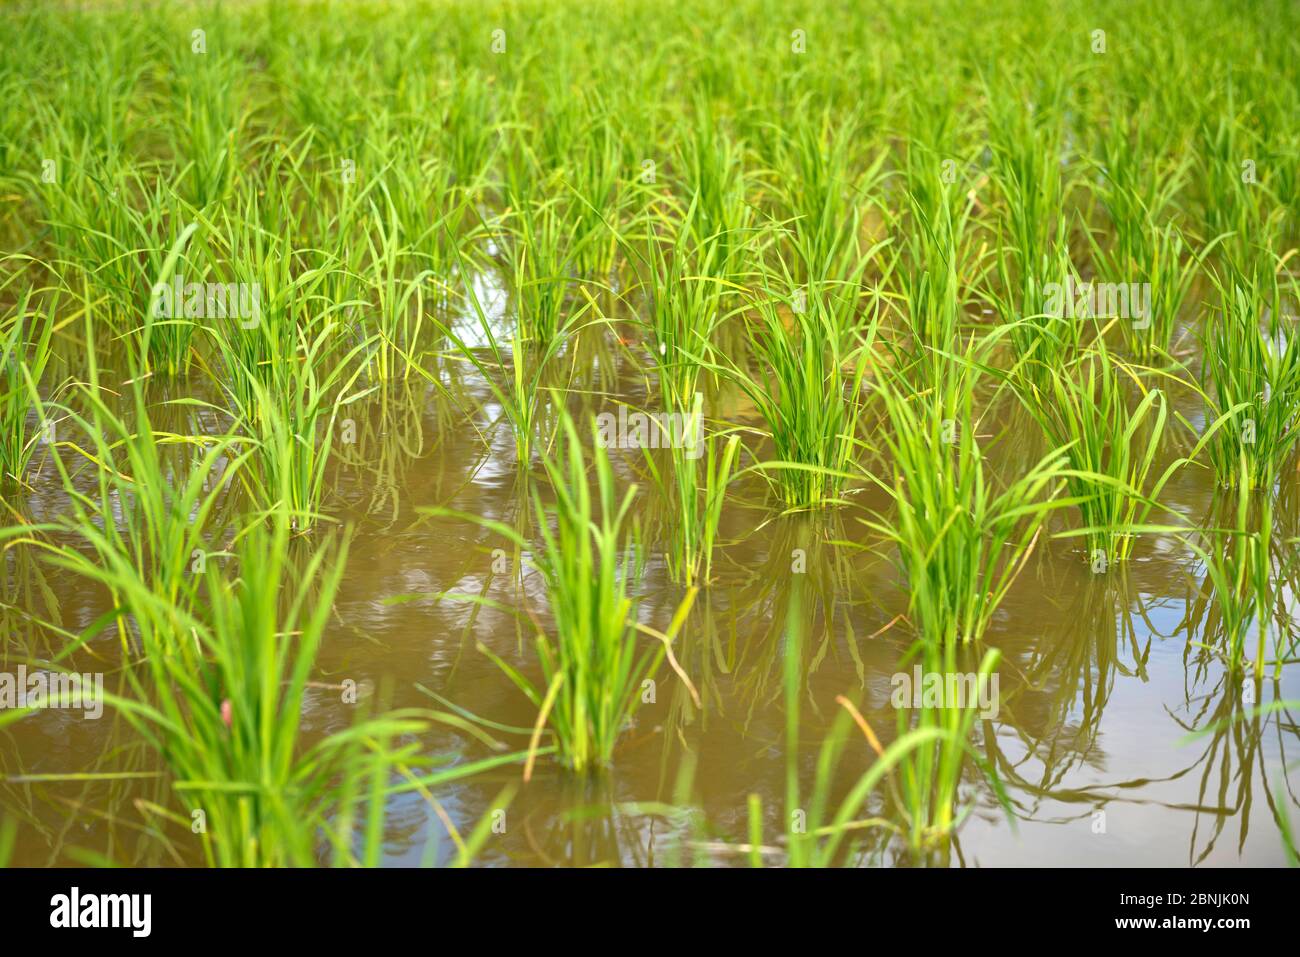 Malaysia,Malaisie,île,Insel,island,Langkawi,Malacca,production de riz,Reisproduktion,rice production Stock Photo